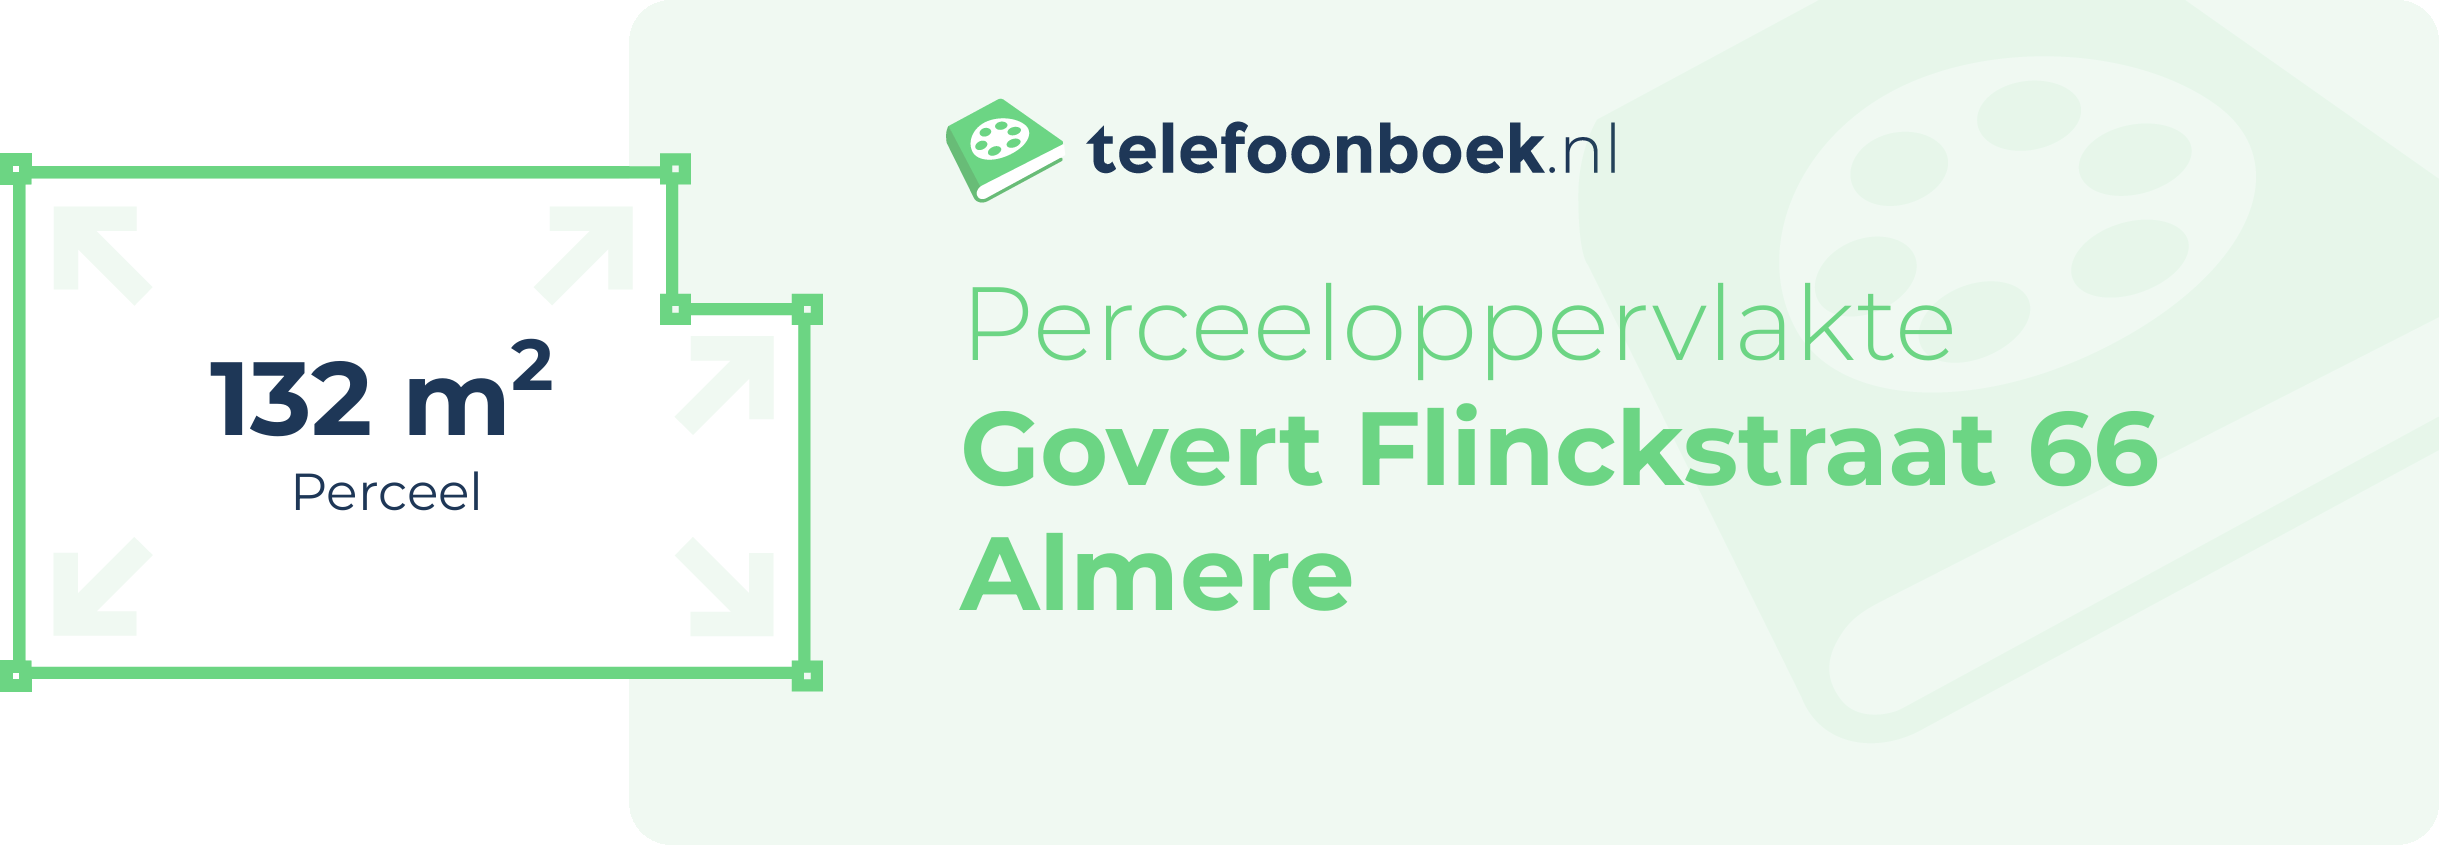 Perceeloppervlakte Govert Flinckstraat 66 Almere